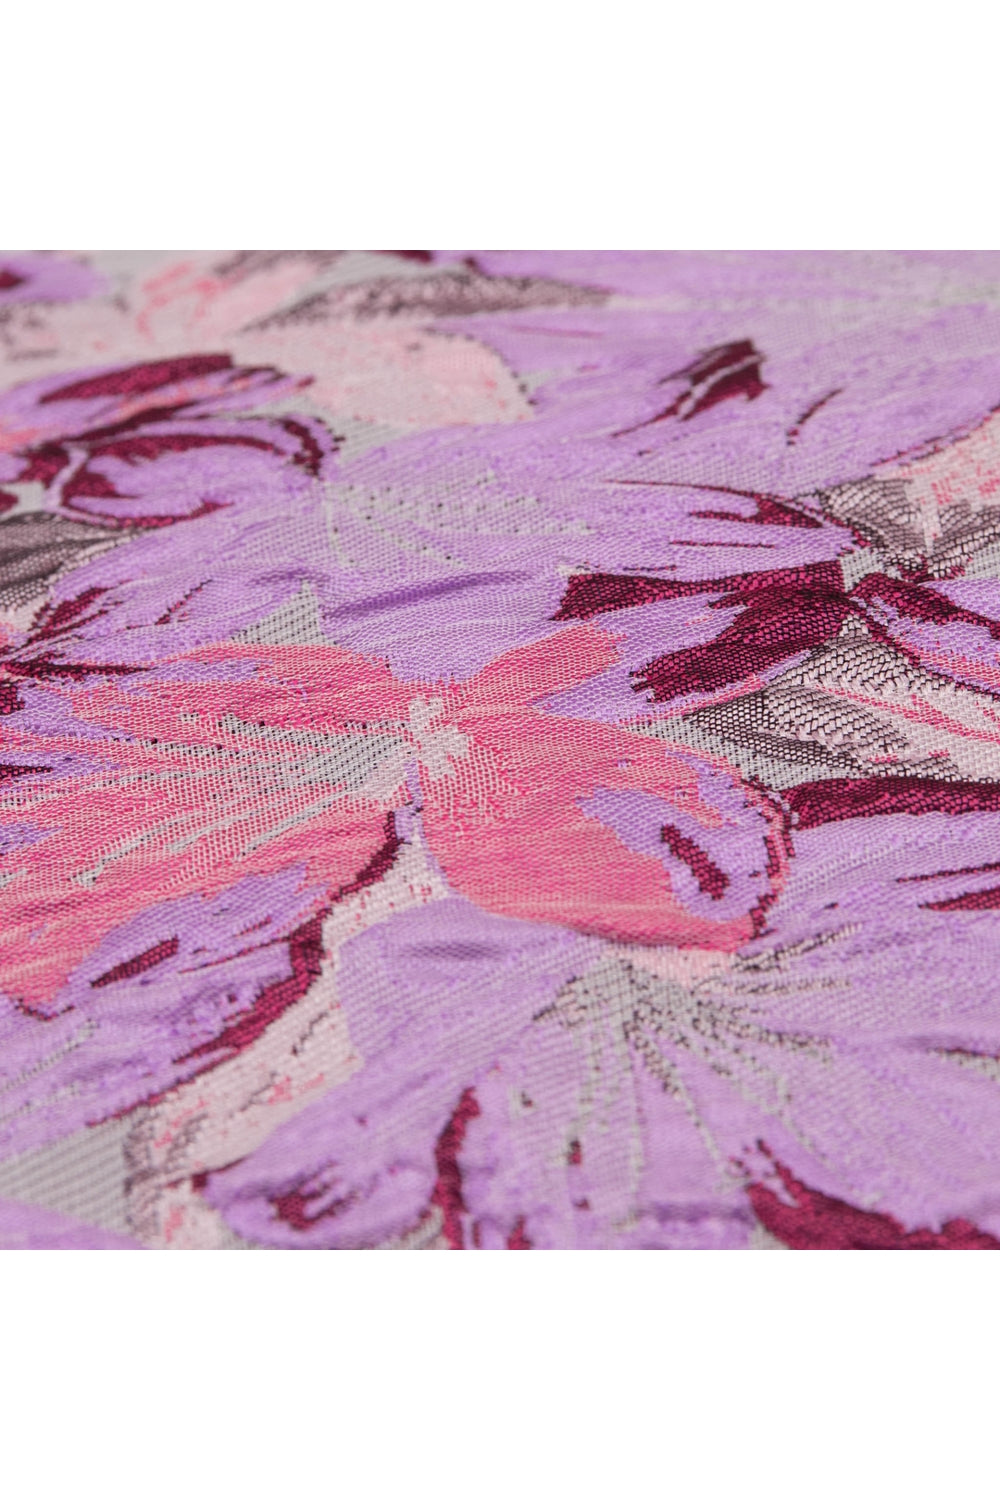 Flower jacquard cushion (50x50 cm), purple